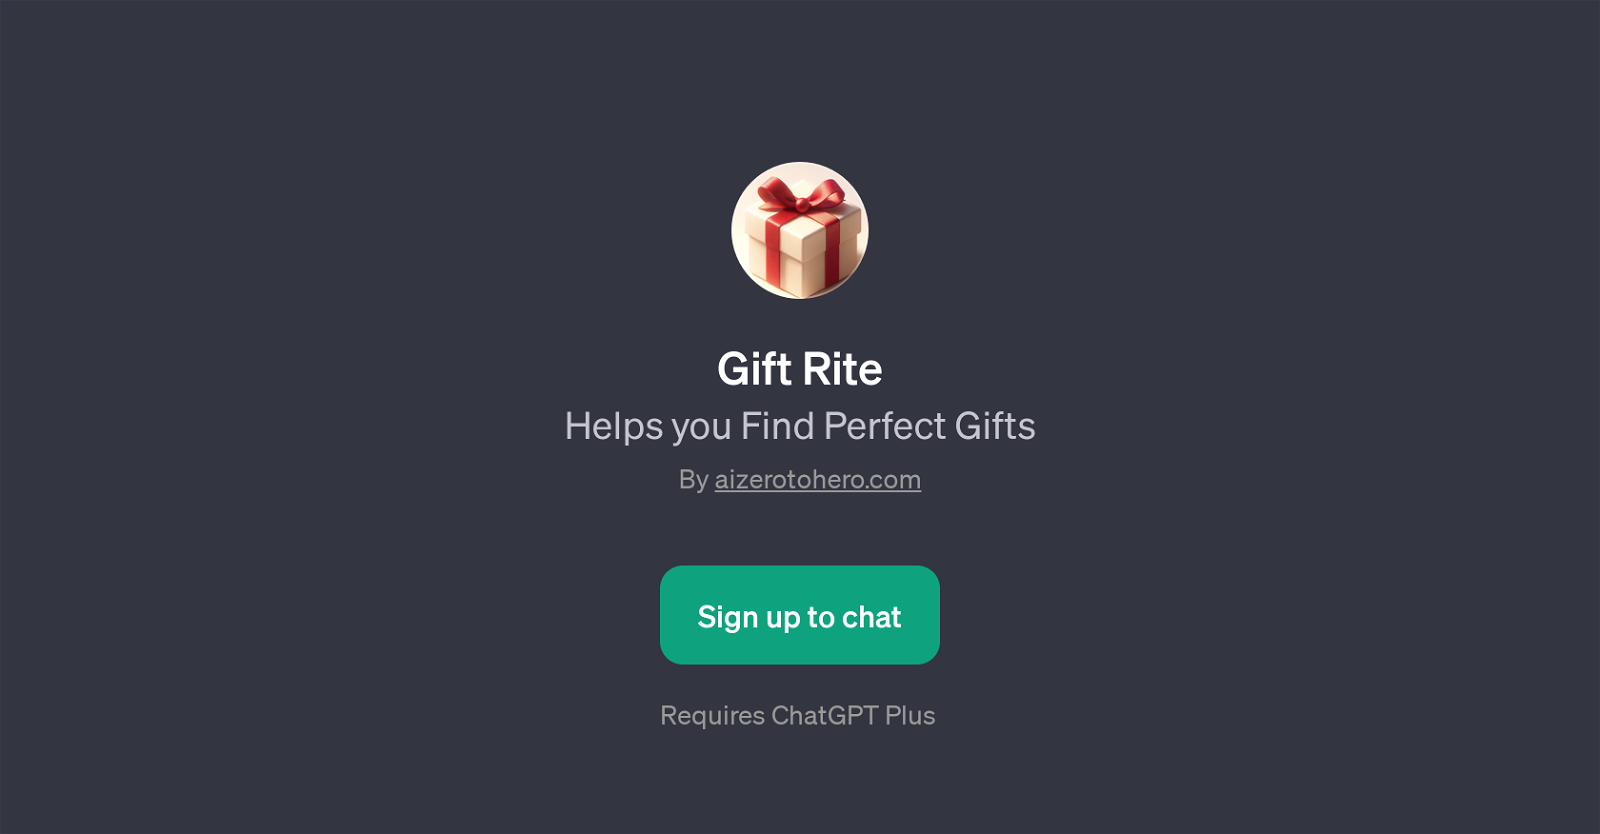 Gift Rite website